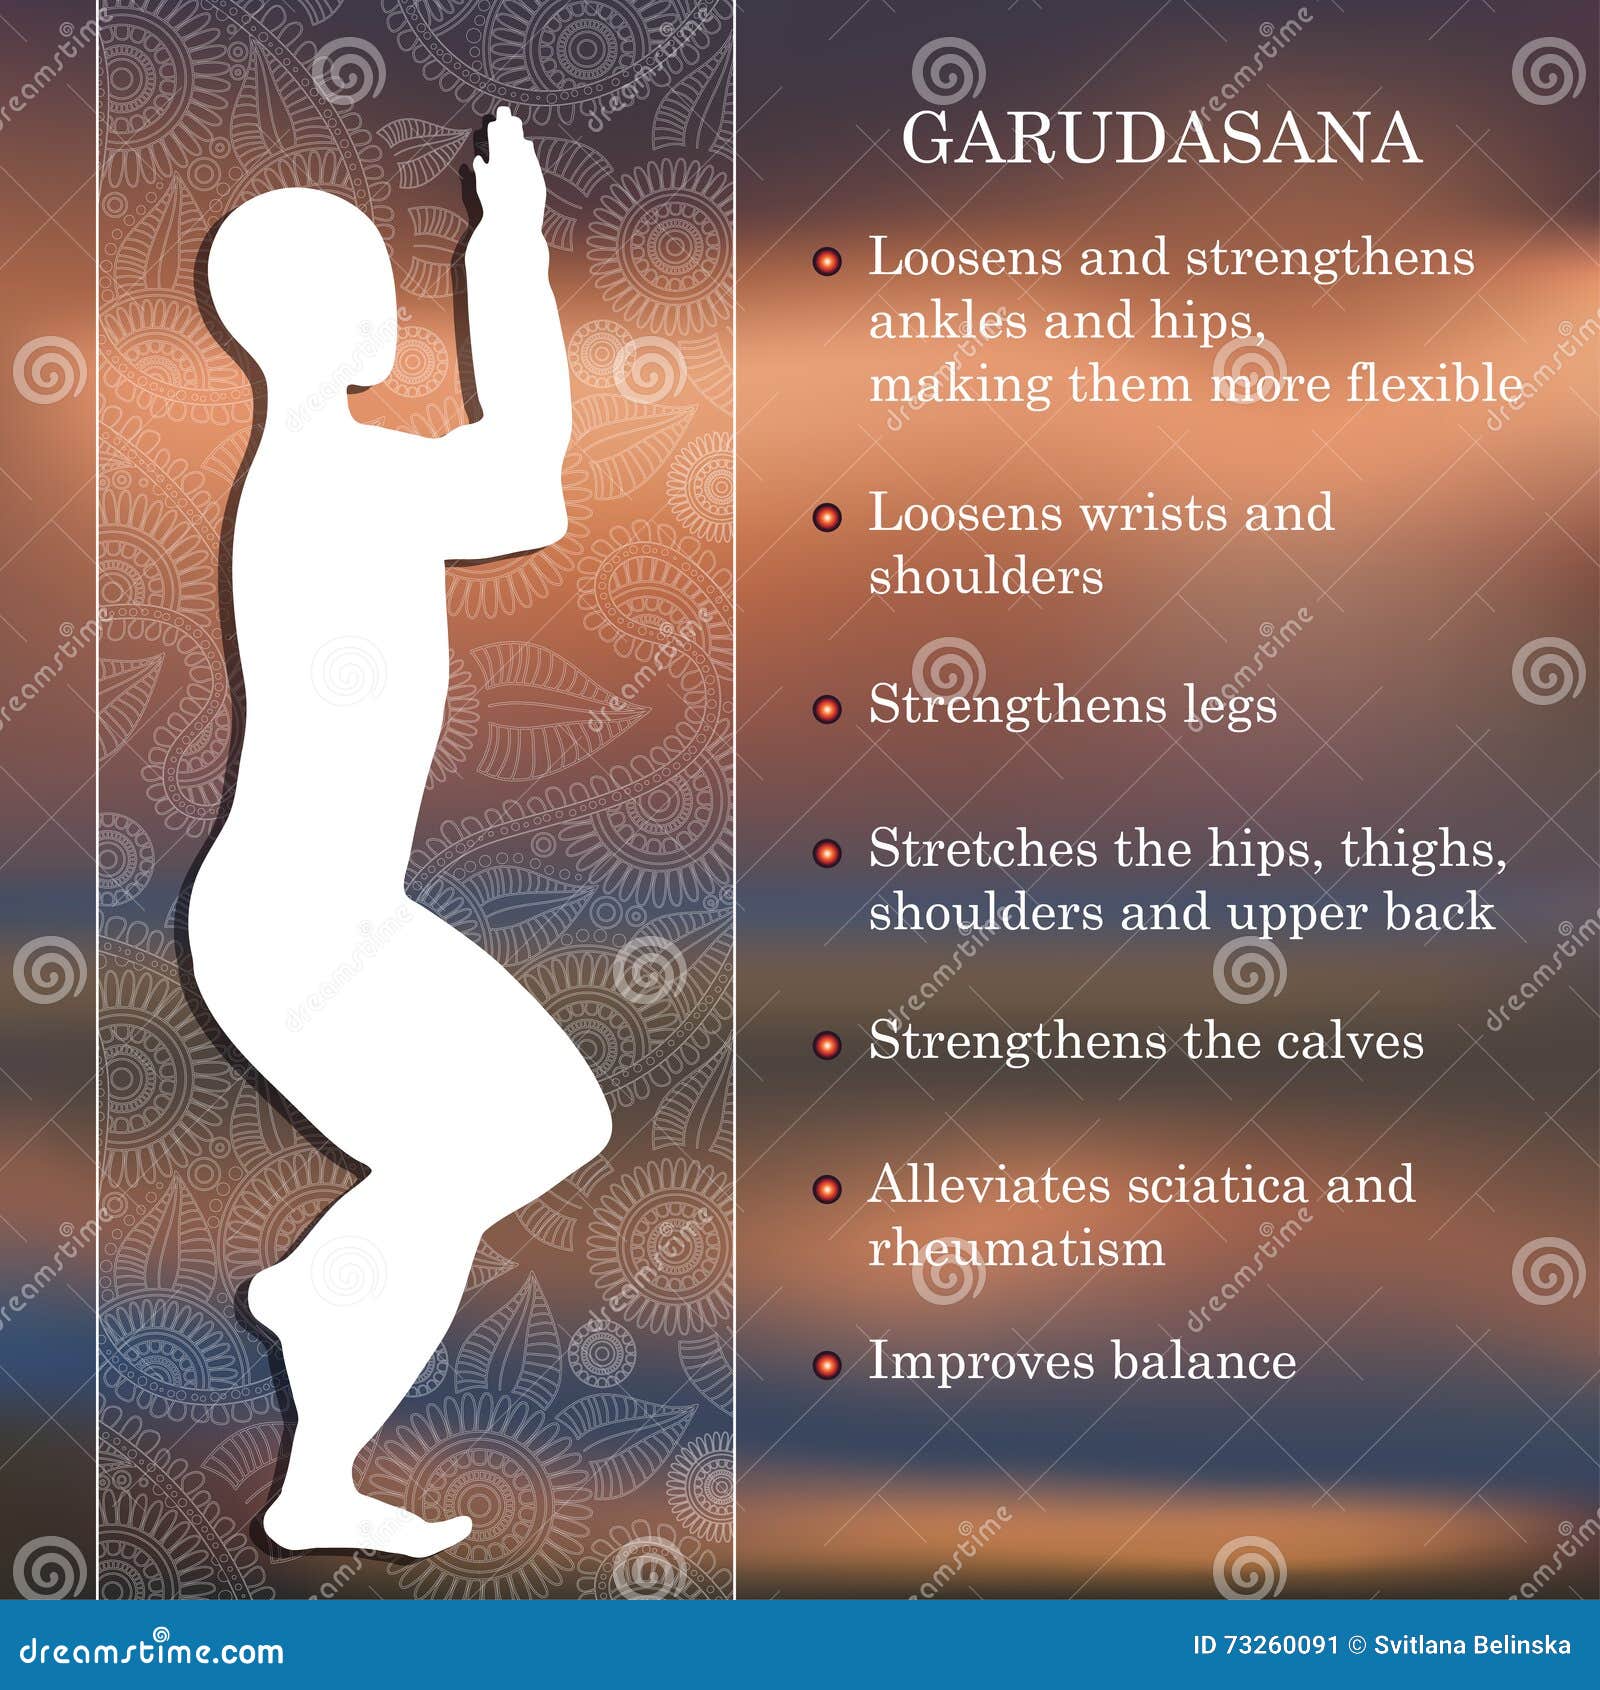 Eagle Pose (Garudasana): How To Practice, Benefits And Precautions |  TheHealthSite.com